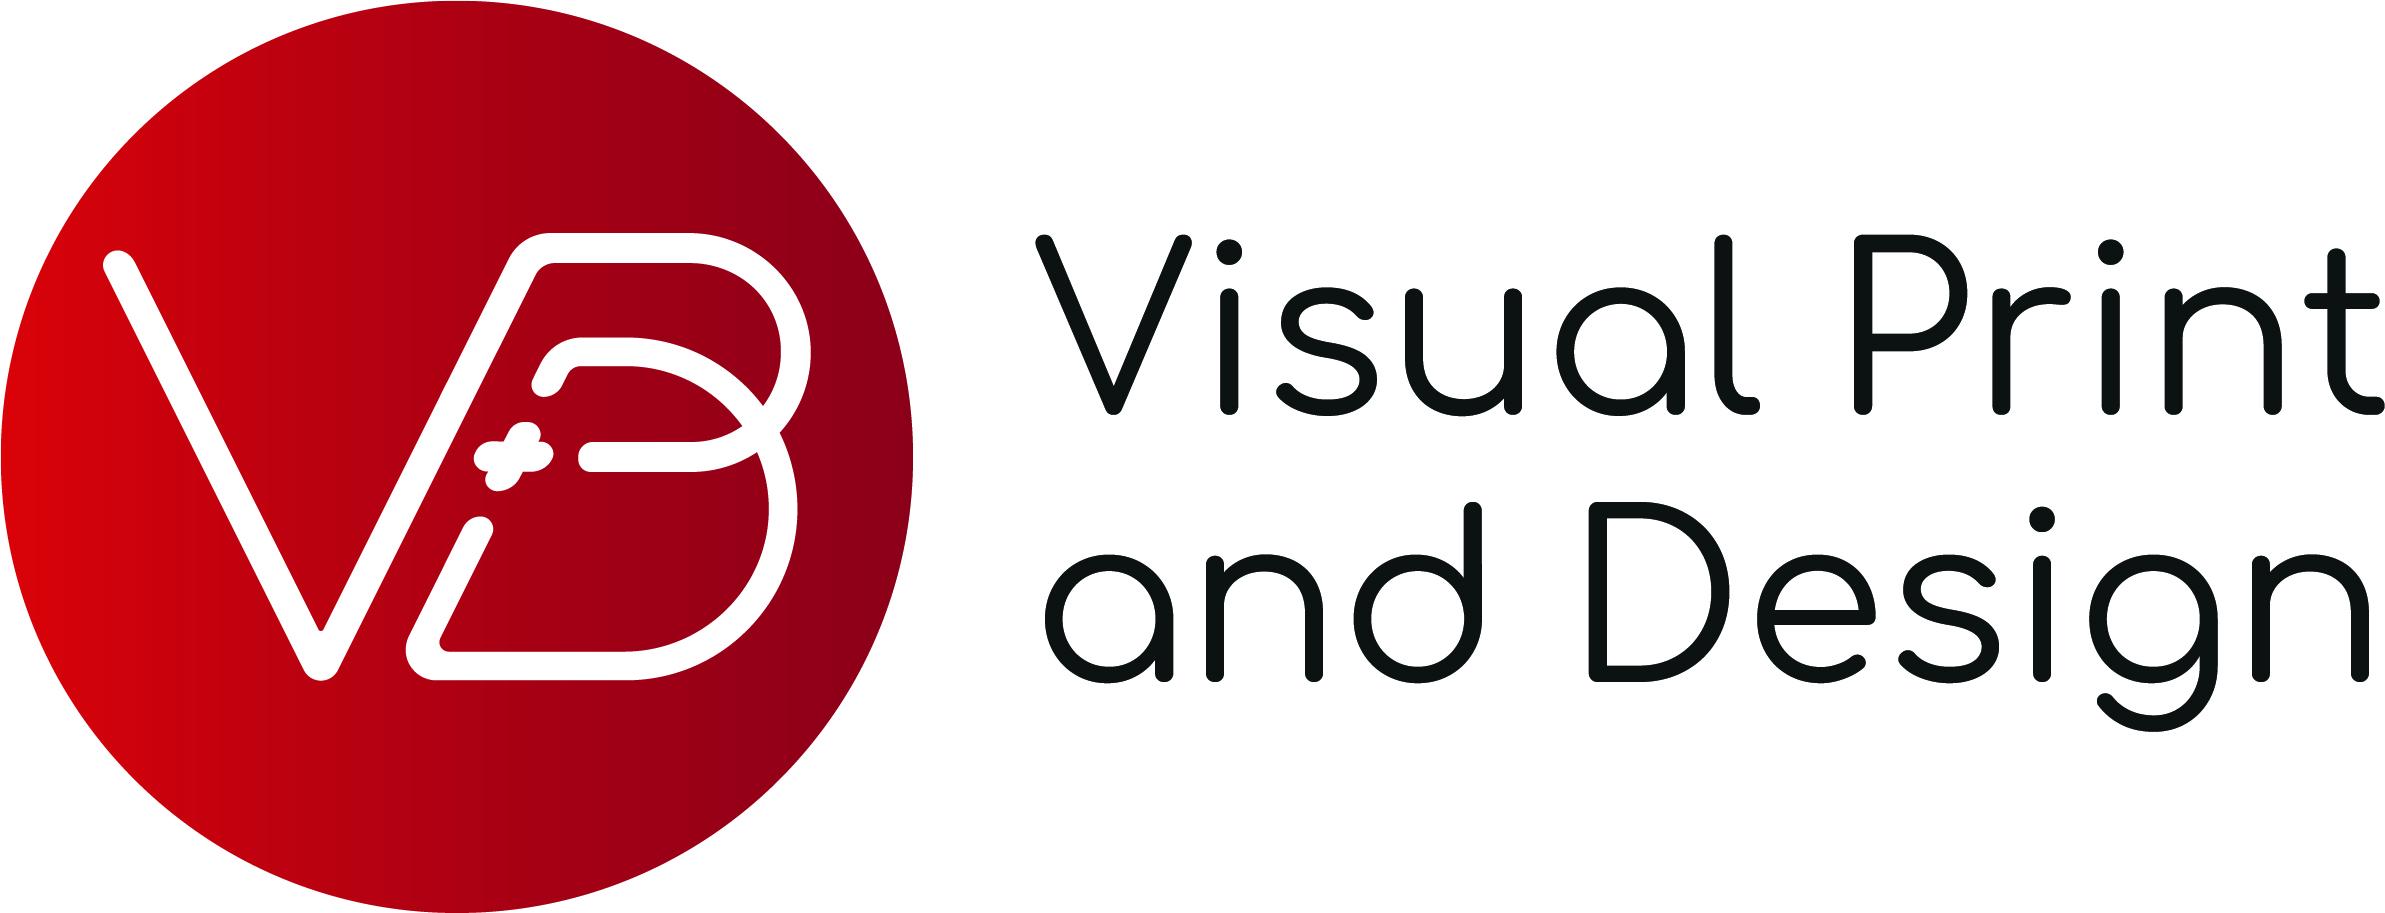 Visual print and design logo